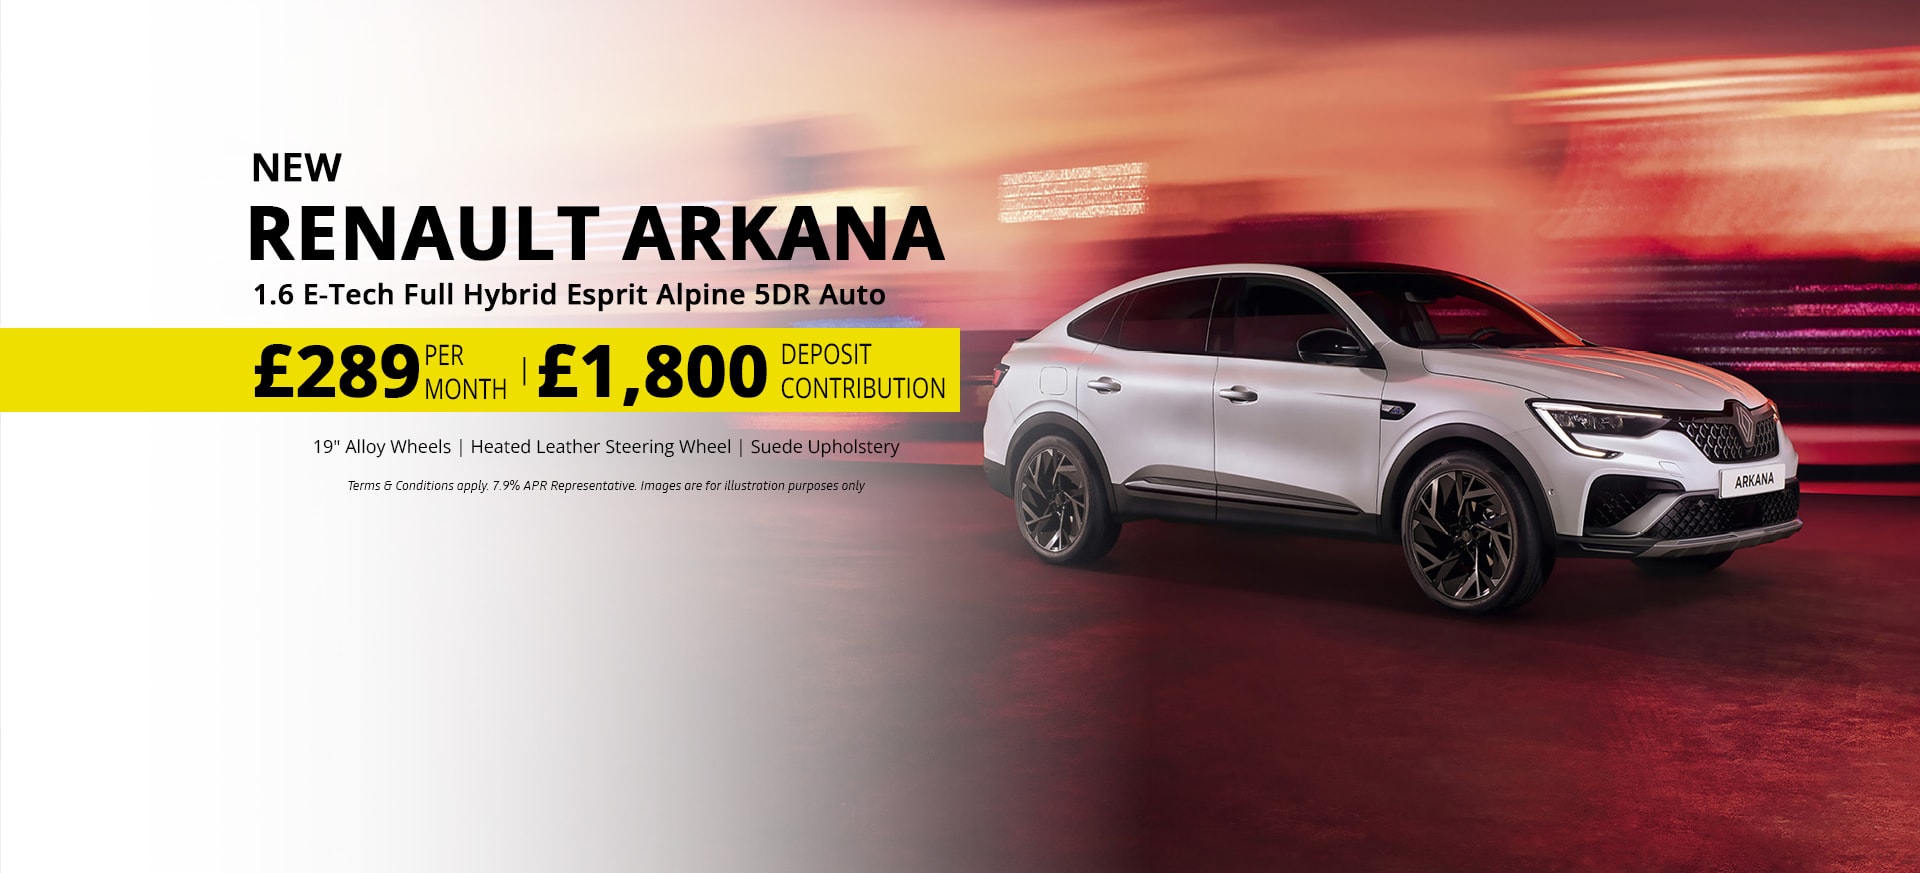 New Renault Arkana